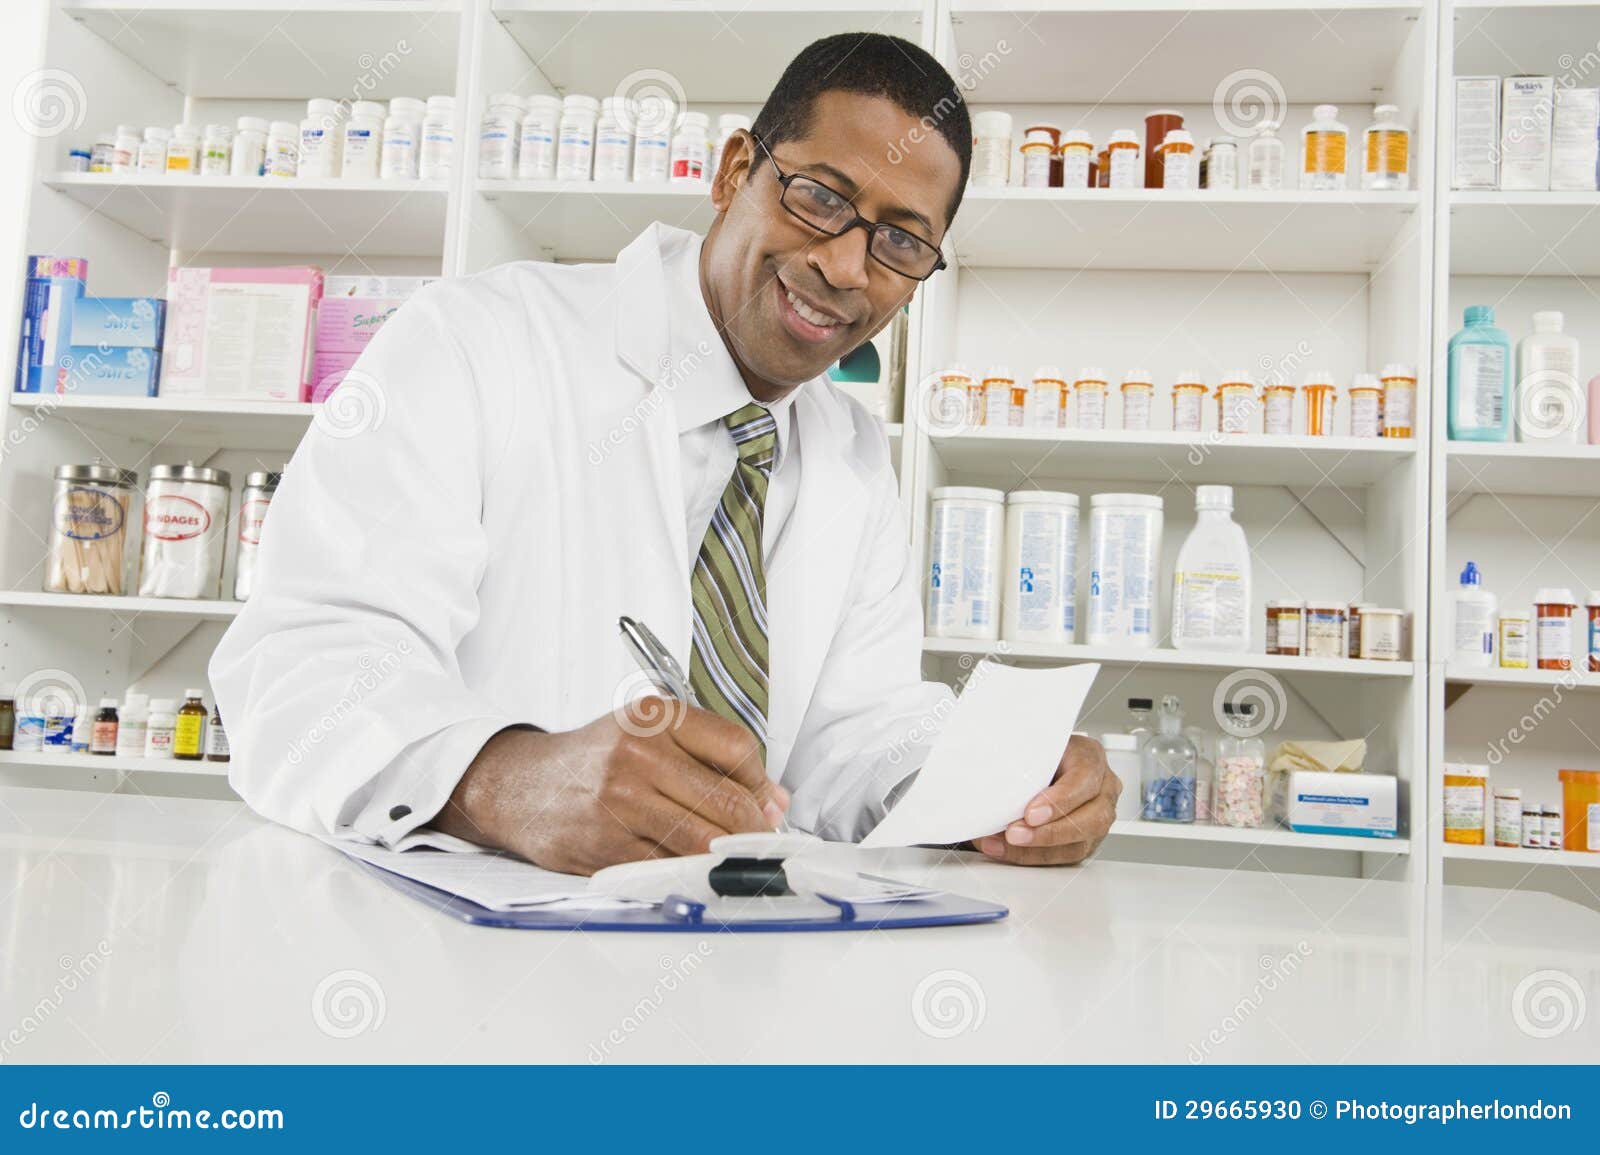 male pharmacist working in pharmacy